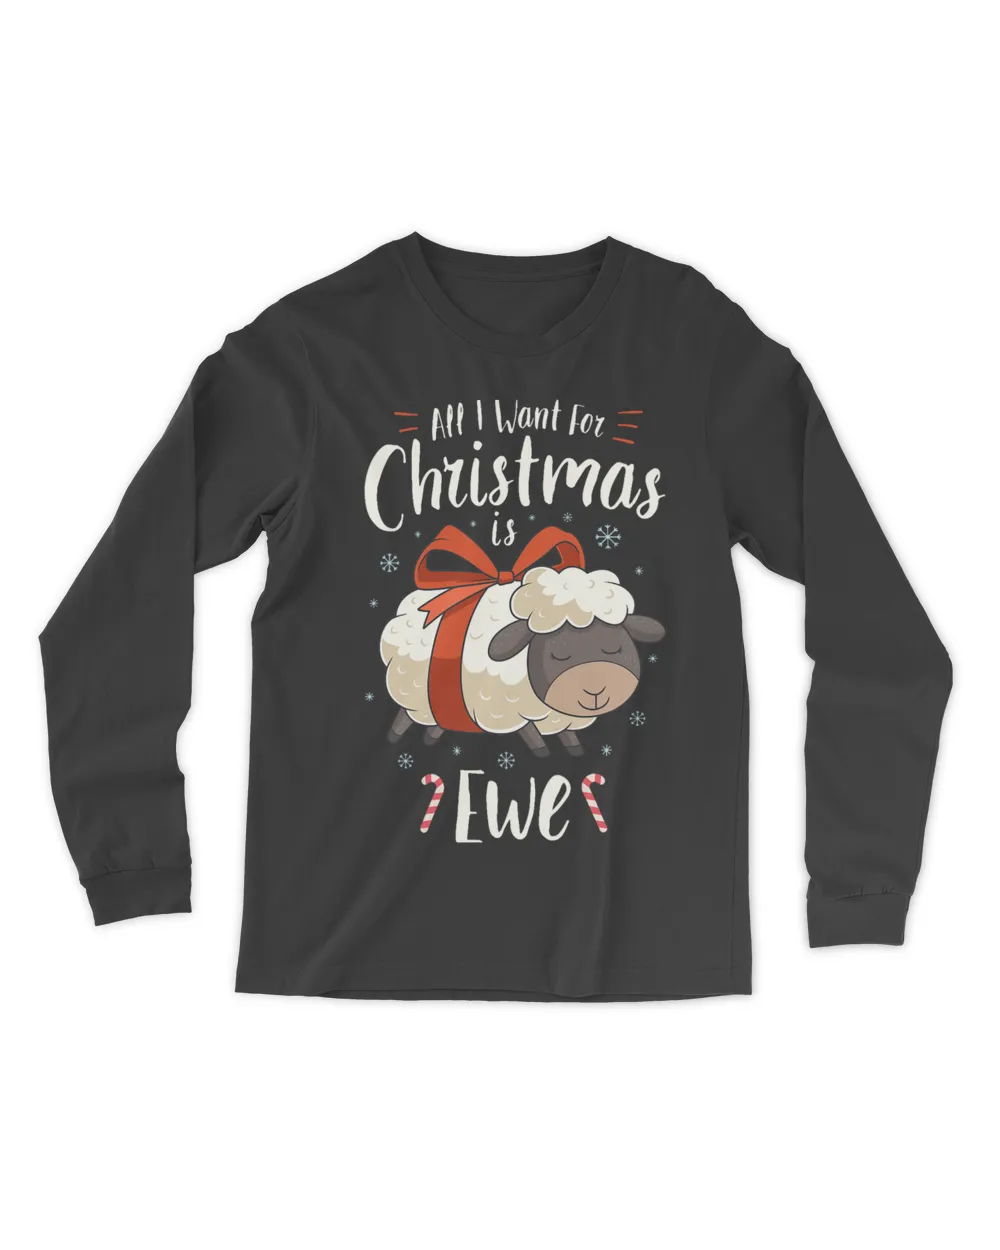 All I Want For Christmas Is Ewe Sheep Xmas Gift